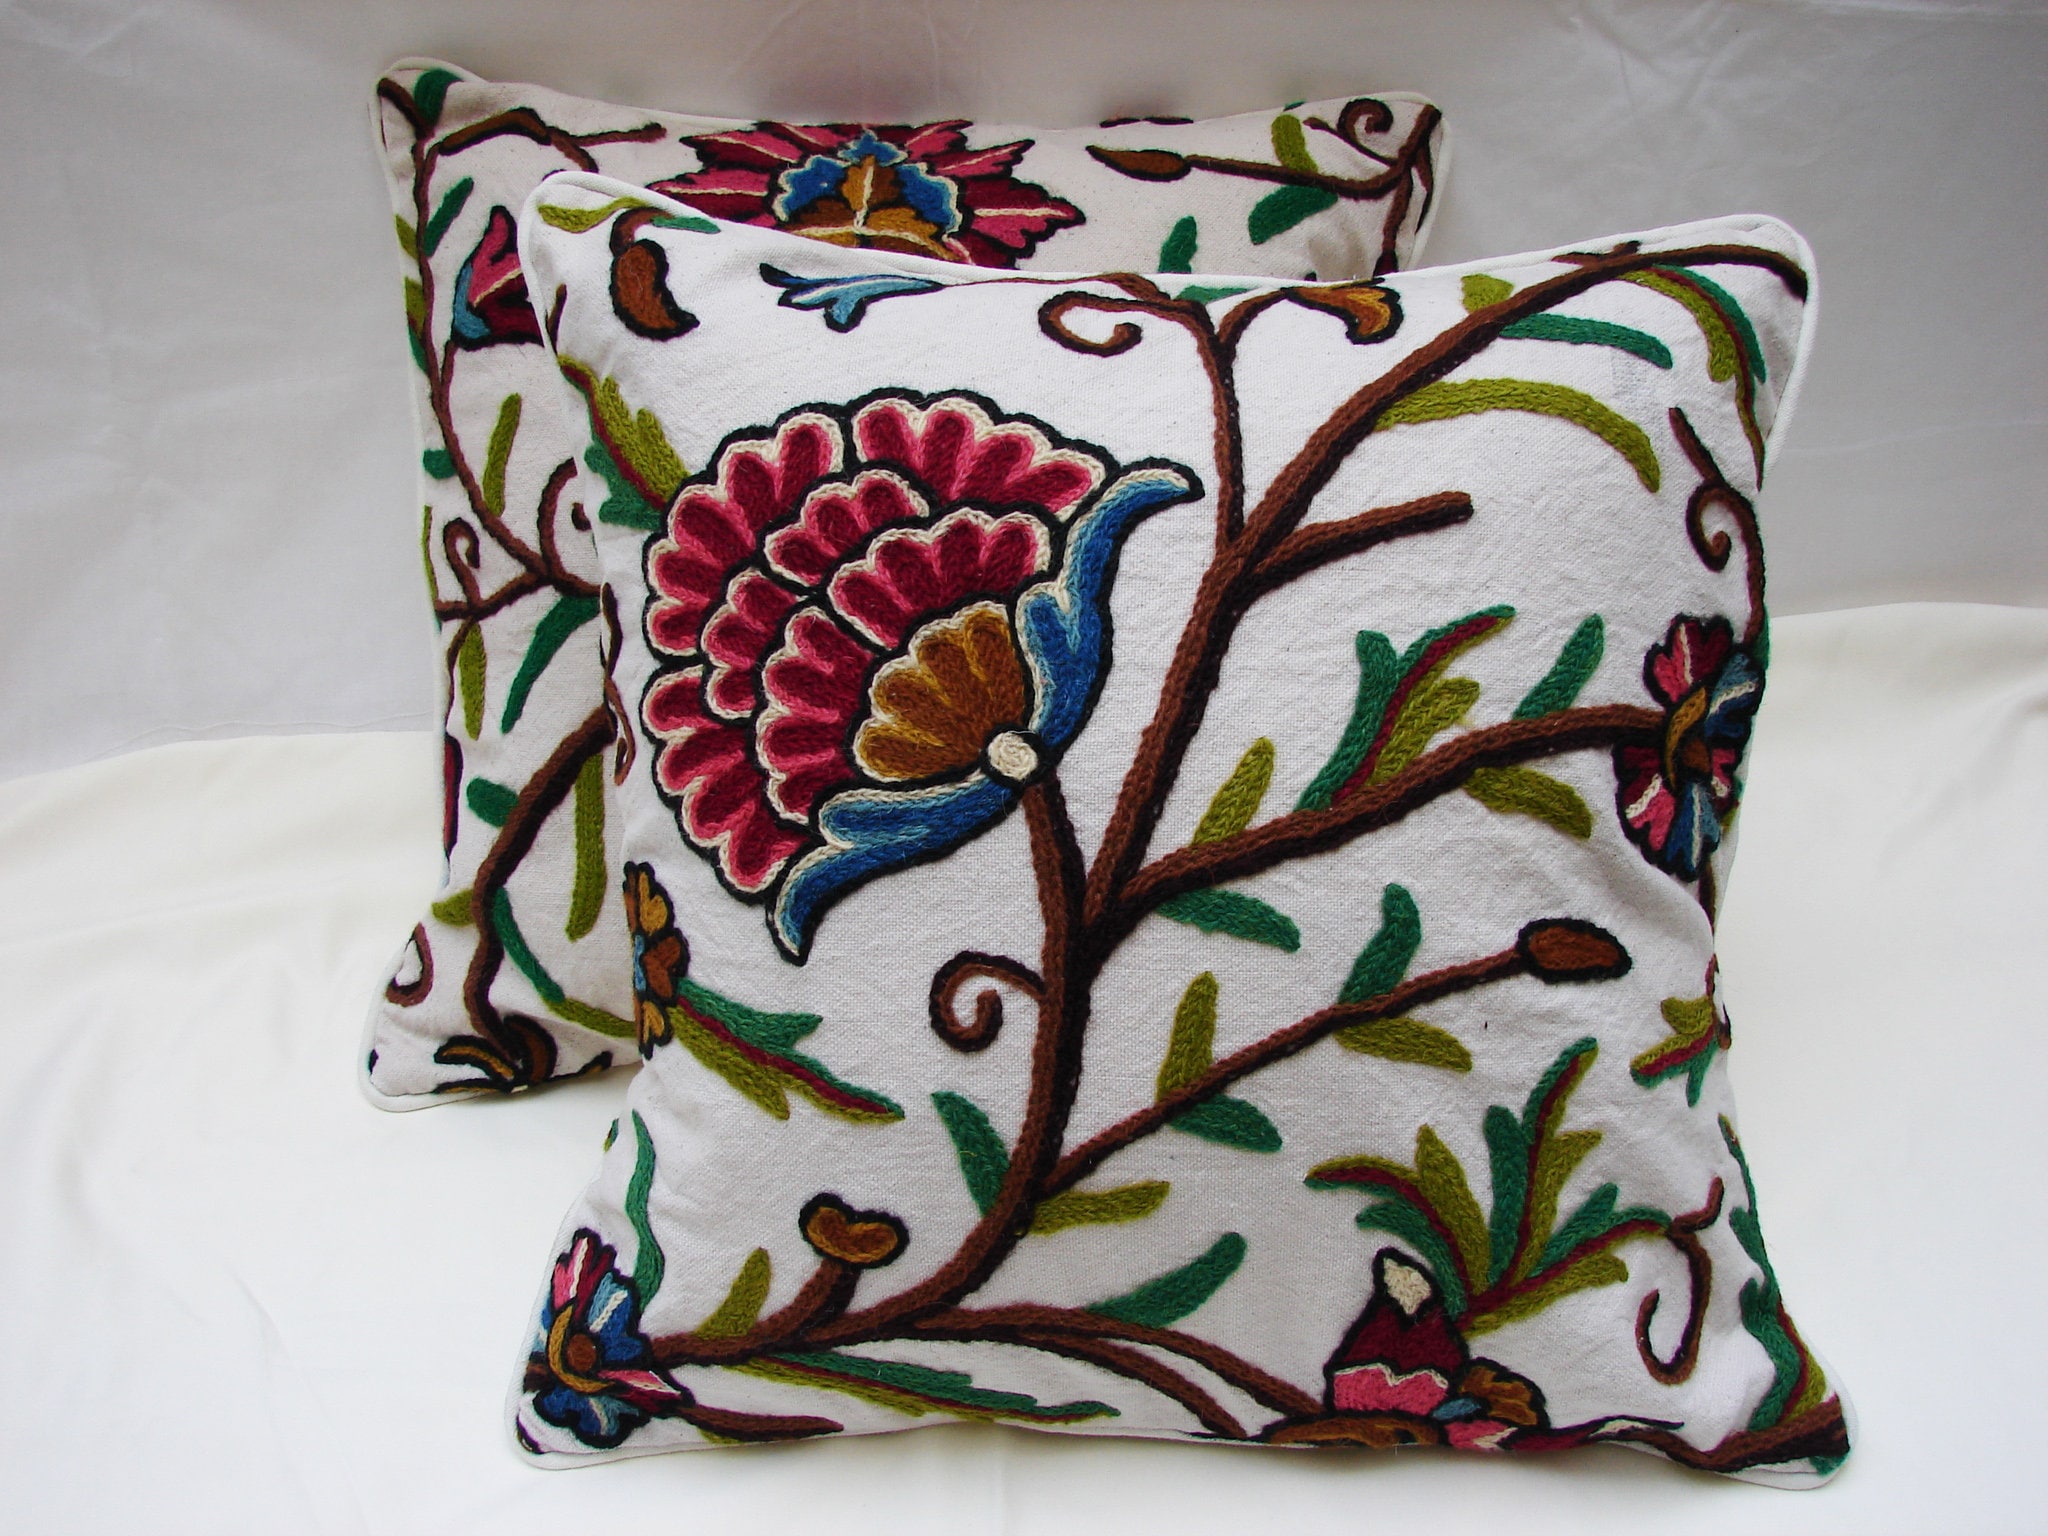 Pottery Barn New York City Pillow Crewel Embroidered 12 Big Apple